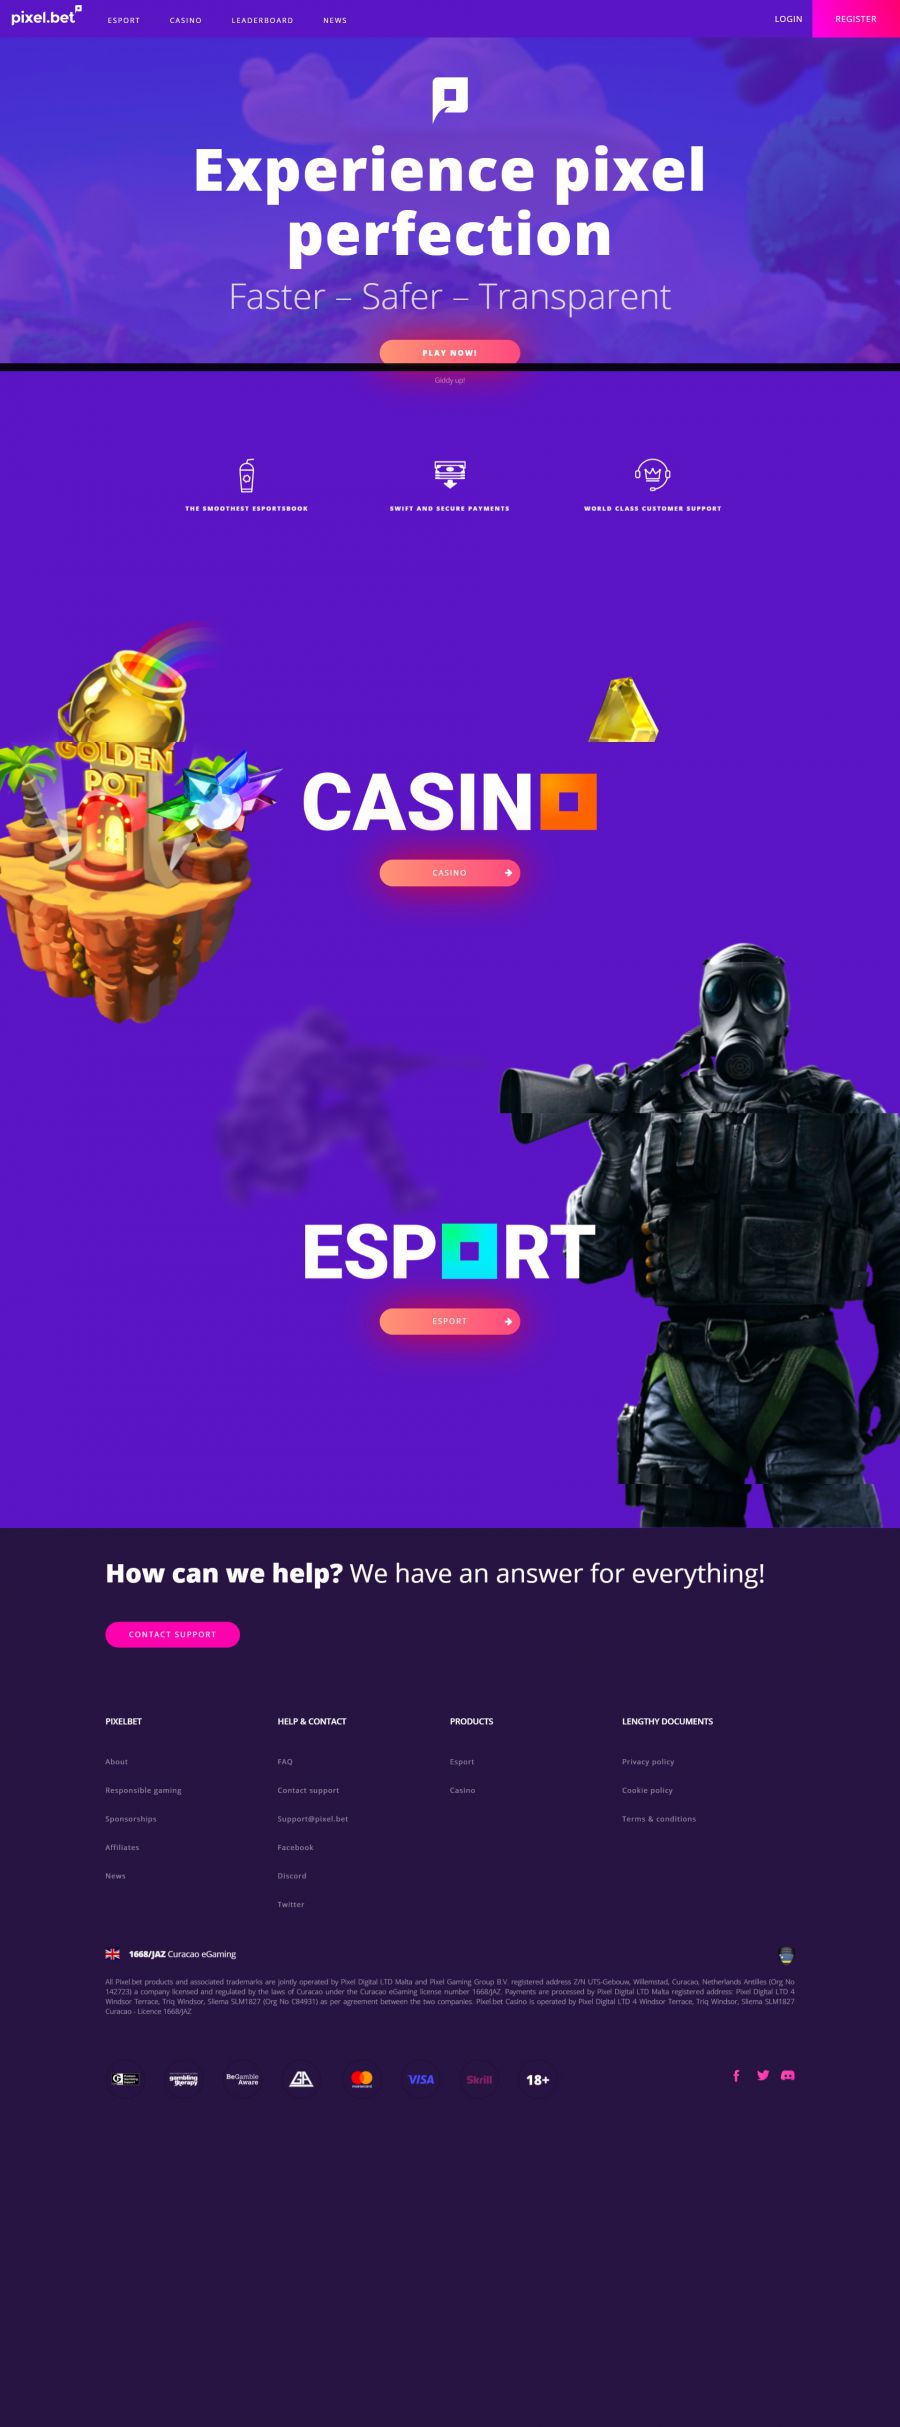 Pixel.bet Casino  screenshot